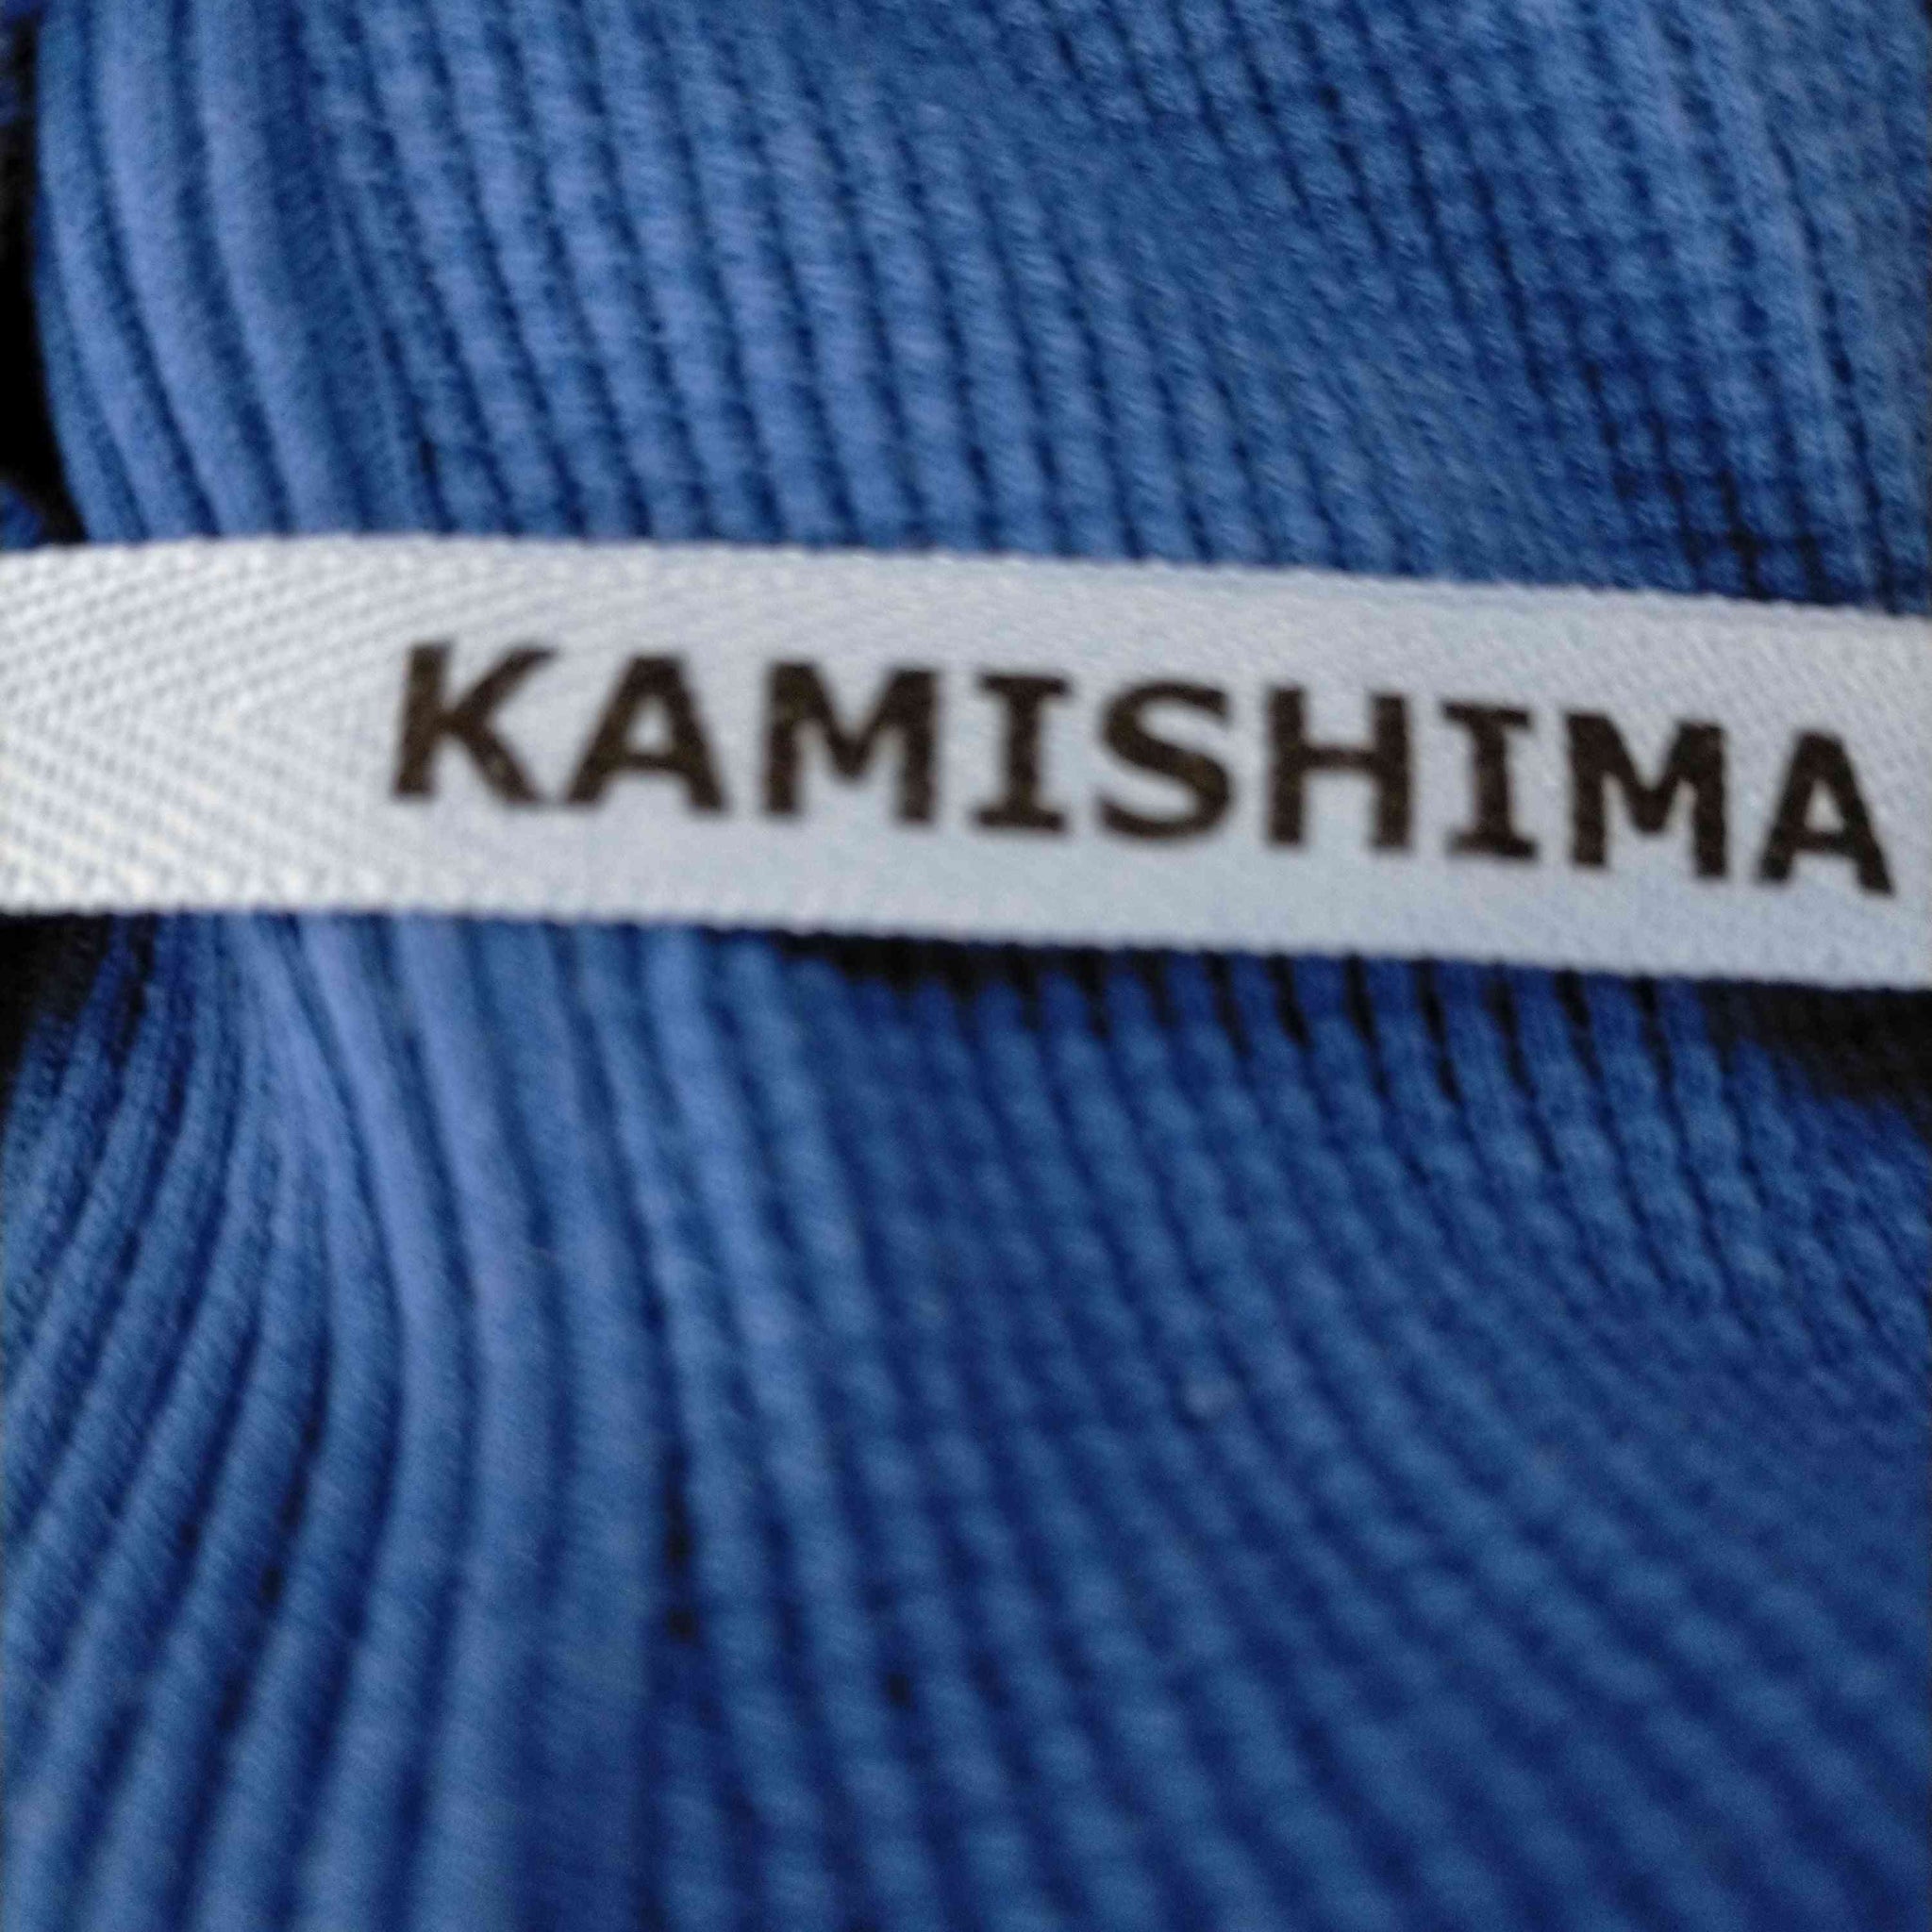 KAMISHIMA CHINAMI(カミシマチナミ)切替クルーネックリブニット